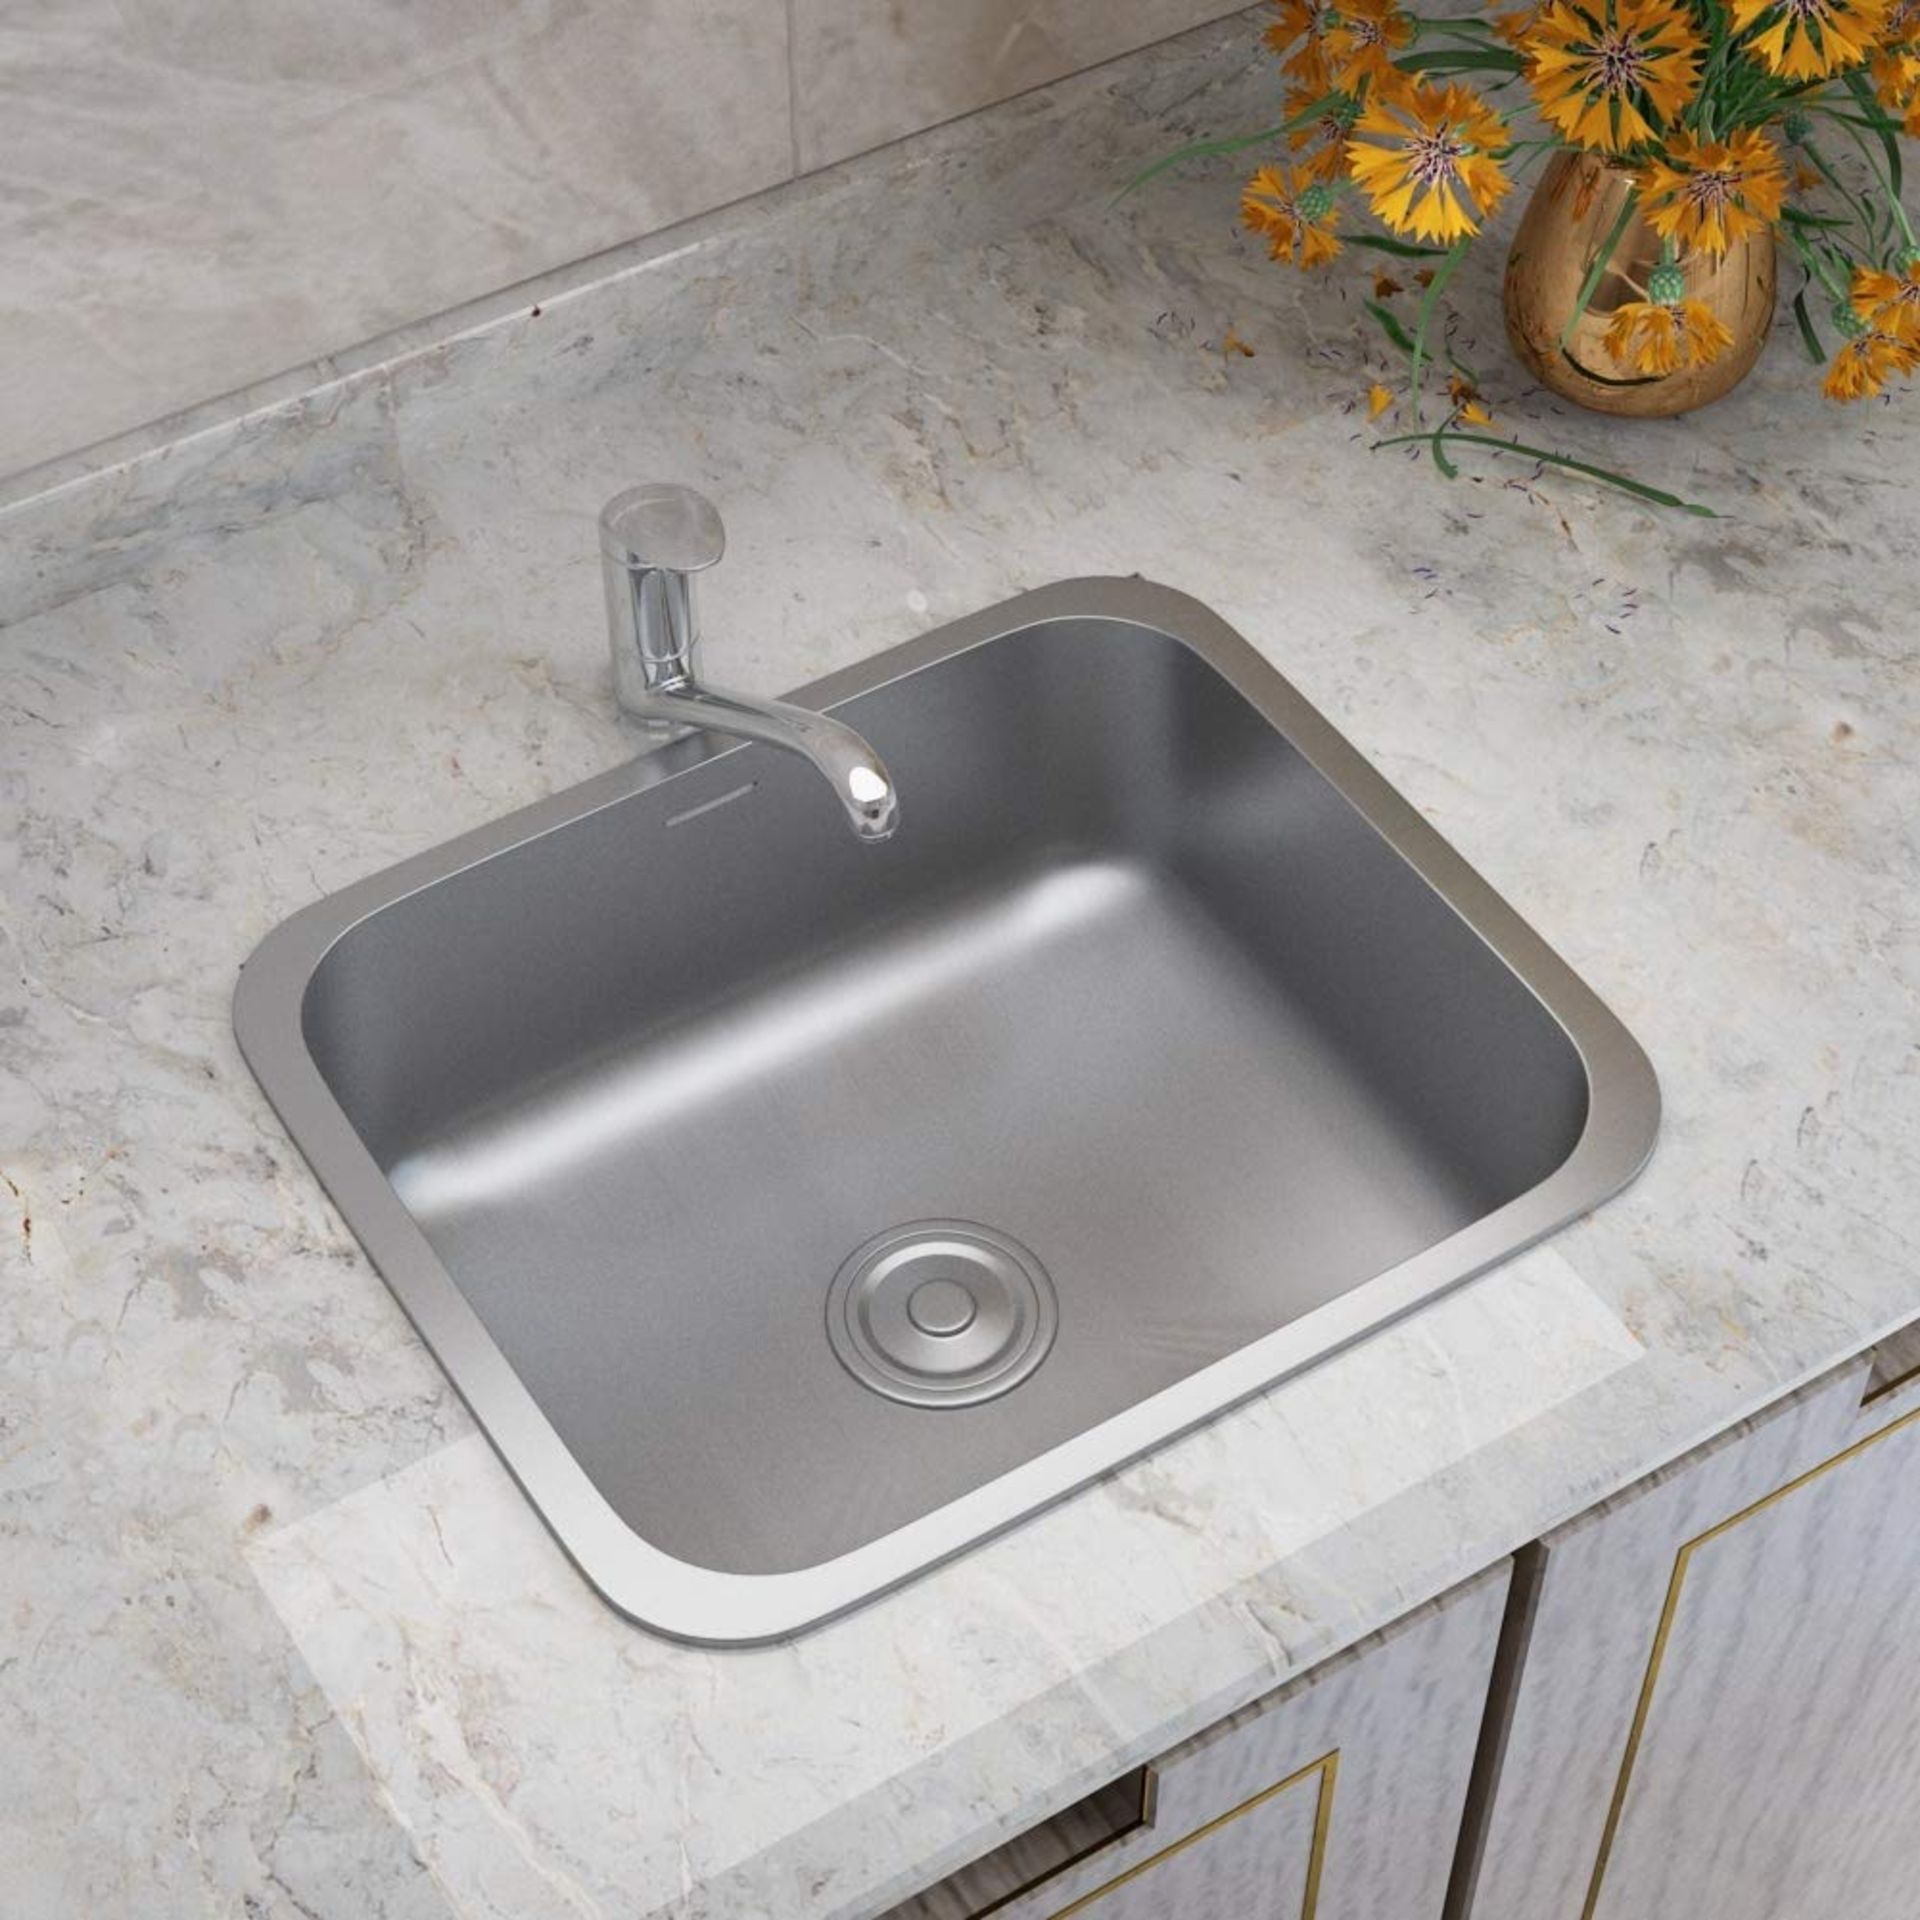 RRP £60.50 XEMQENER Stainless Steel Kitchen Sink Single Bowl 410x360x205mm